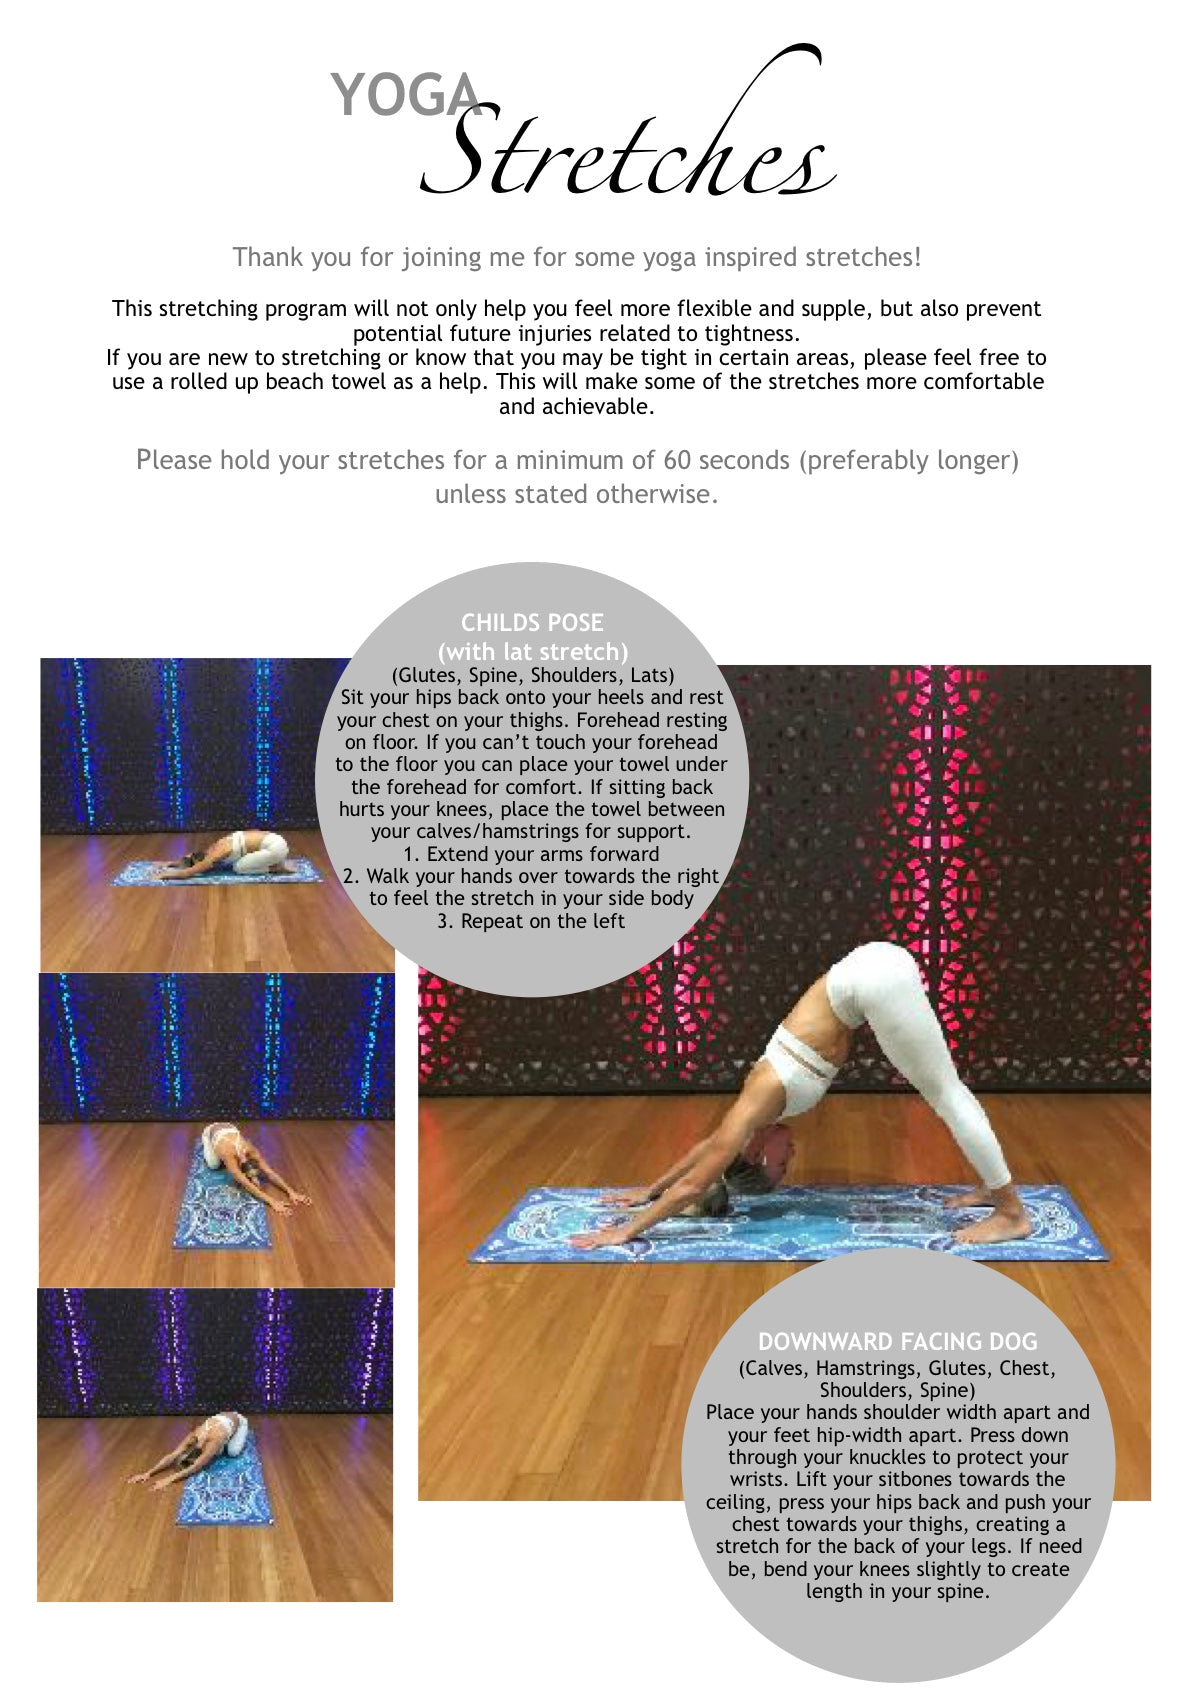 Yoga Stretching Program